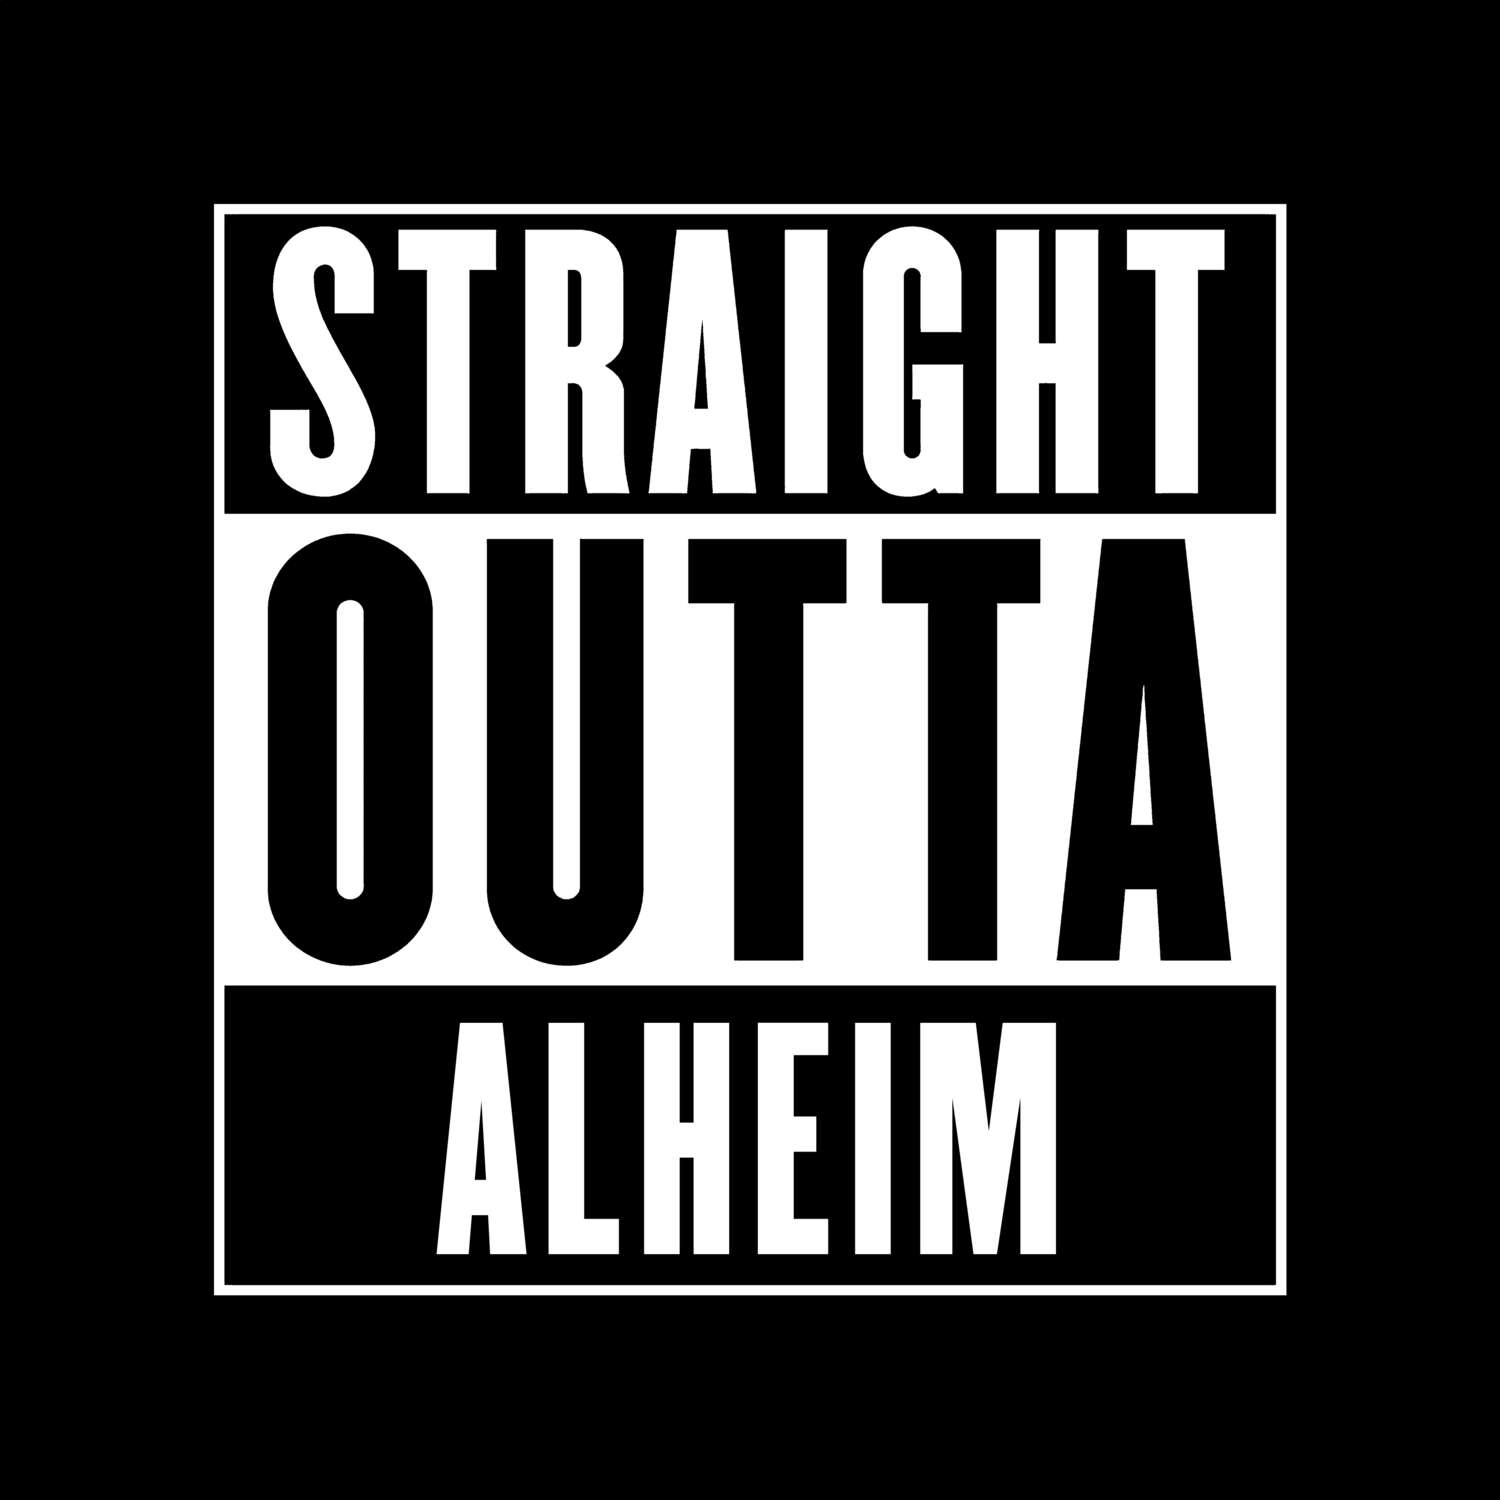 Alheim T-Shirt »Straight Outta«